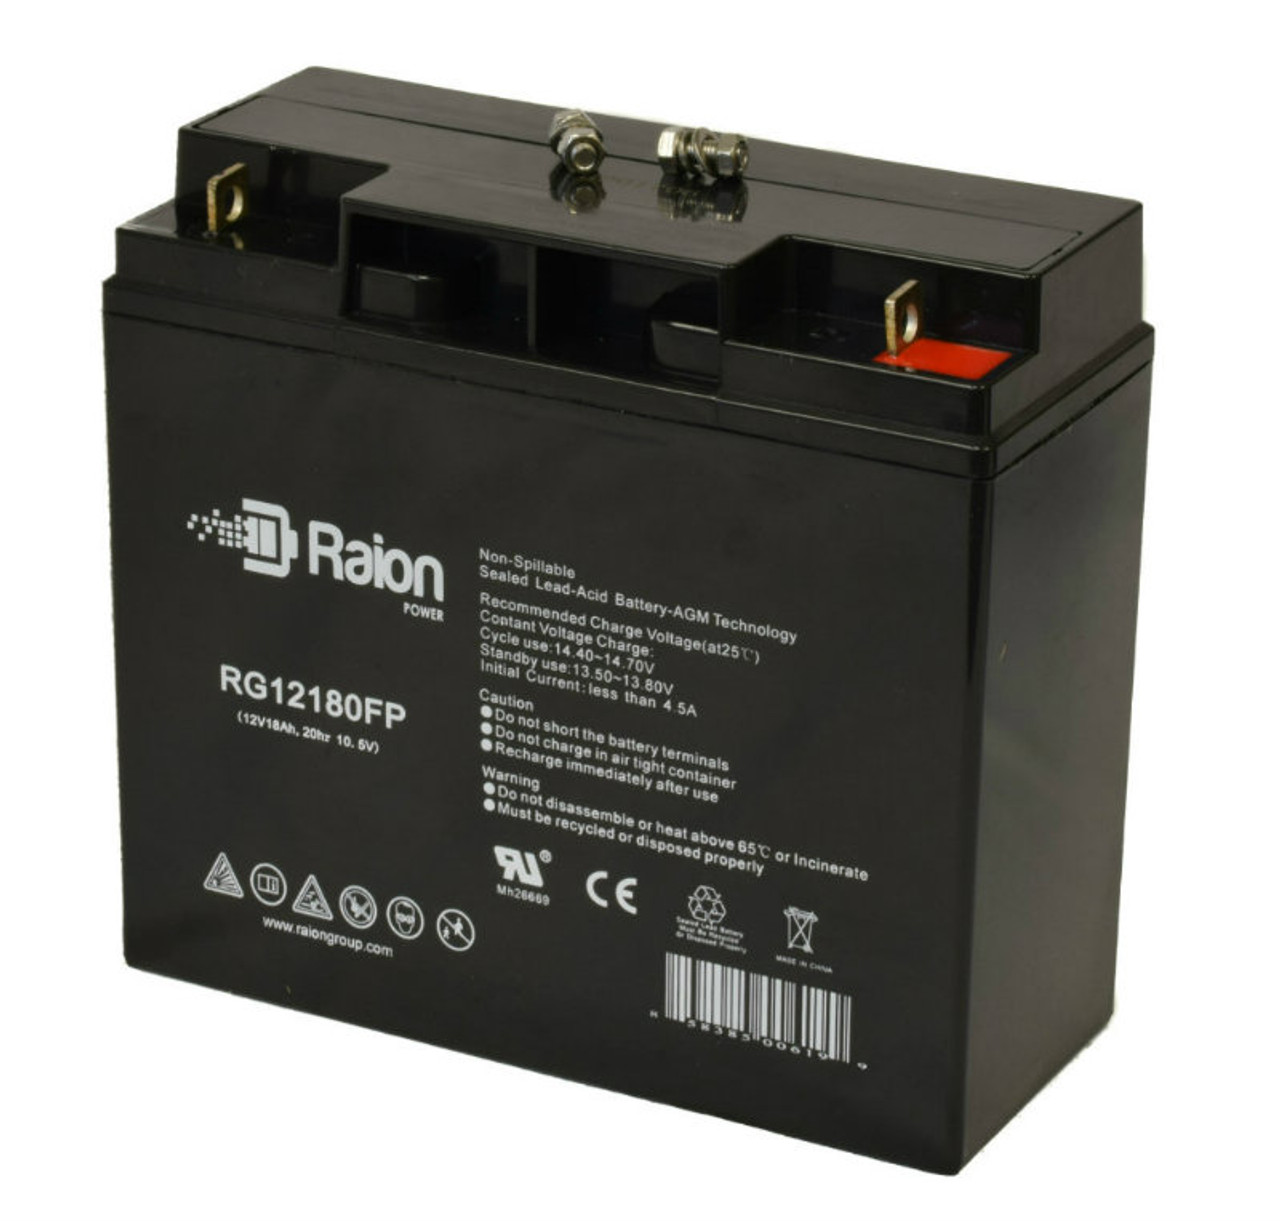 Raion Power Replacement 12V 18Ah Battery for Koyosonic NP20-12 - 1 Pack